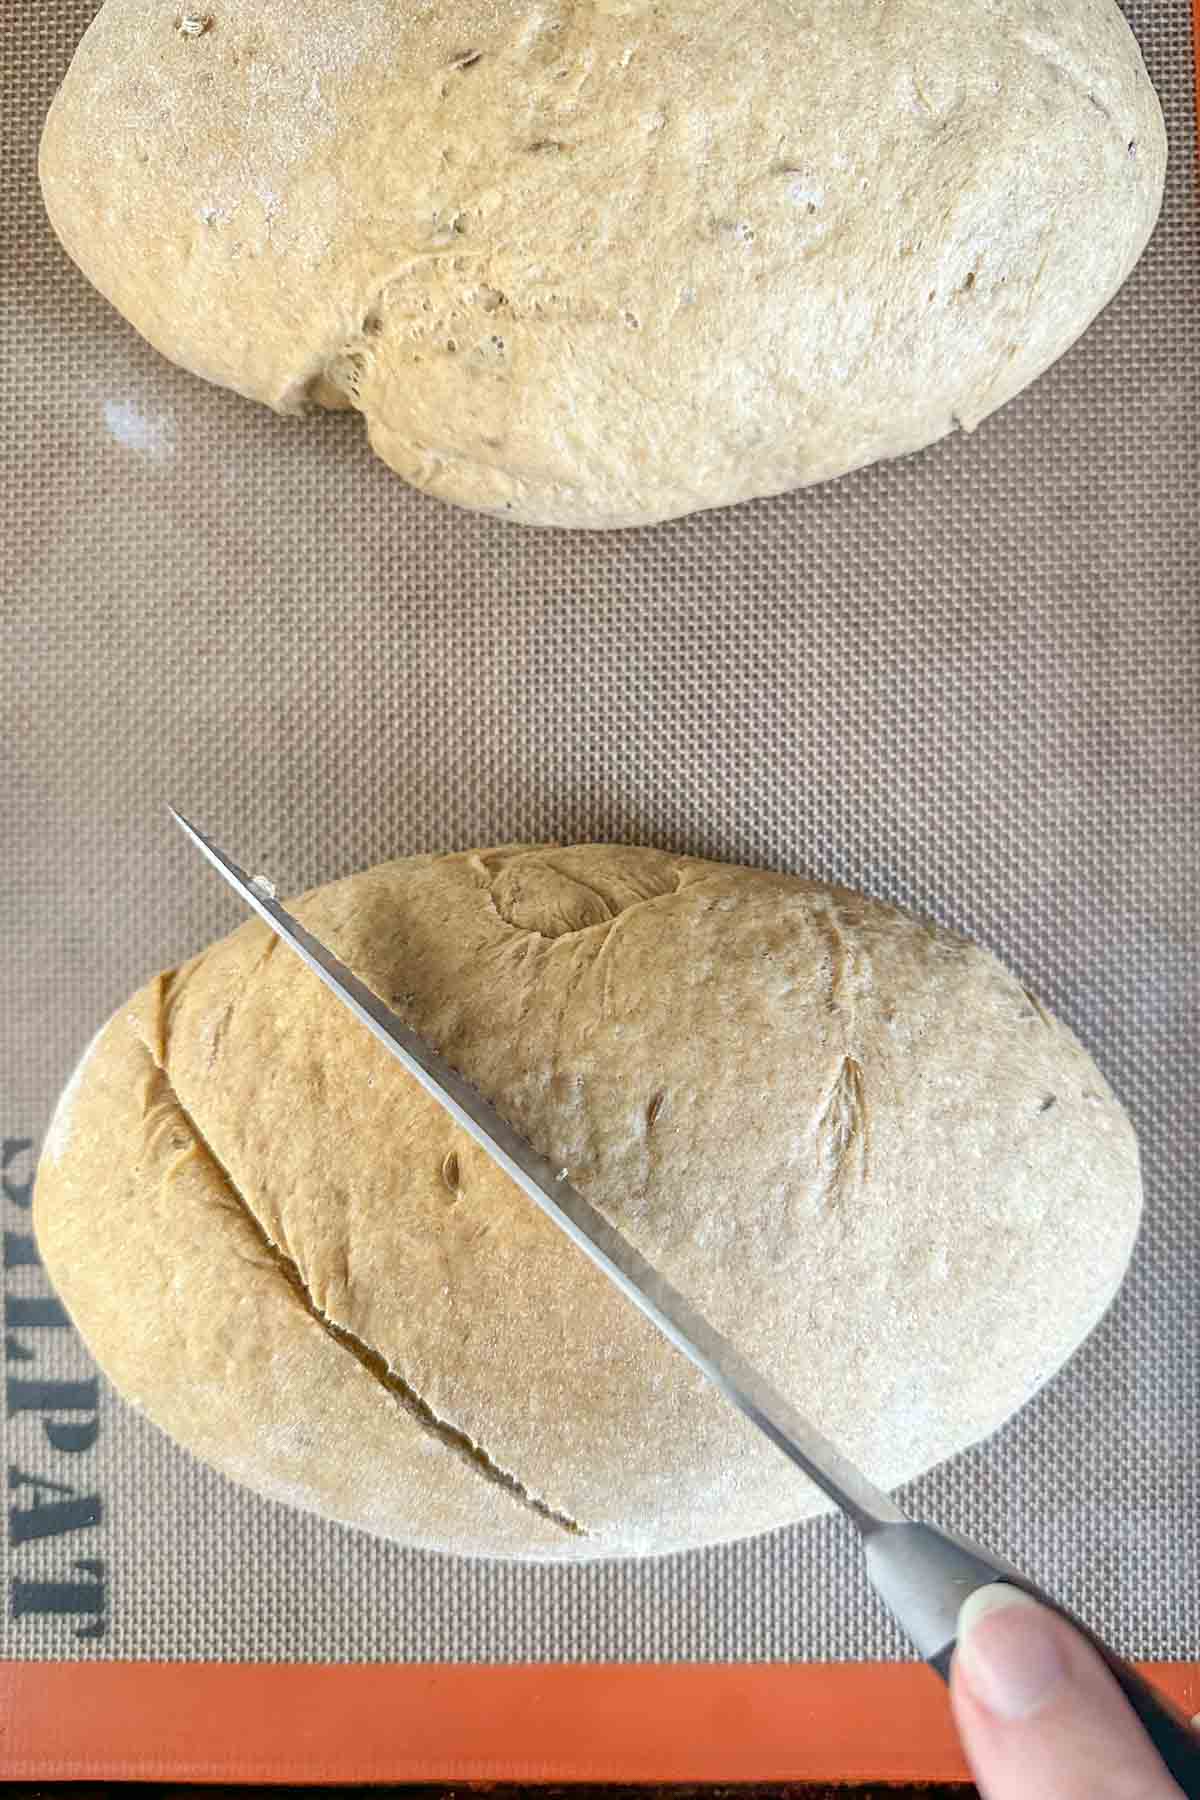 Slashing limpa bread loaves before baking.